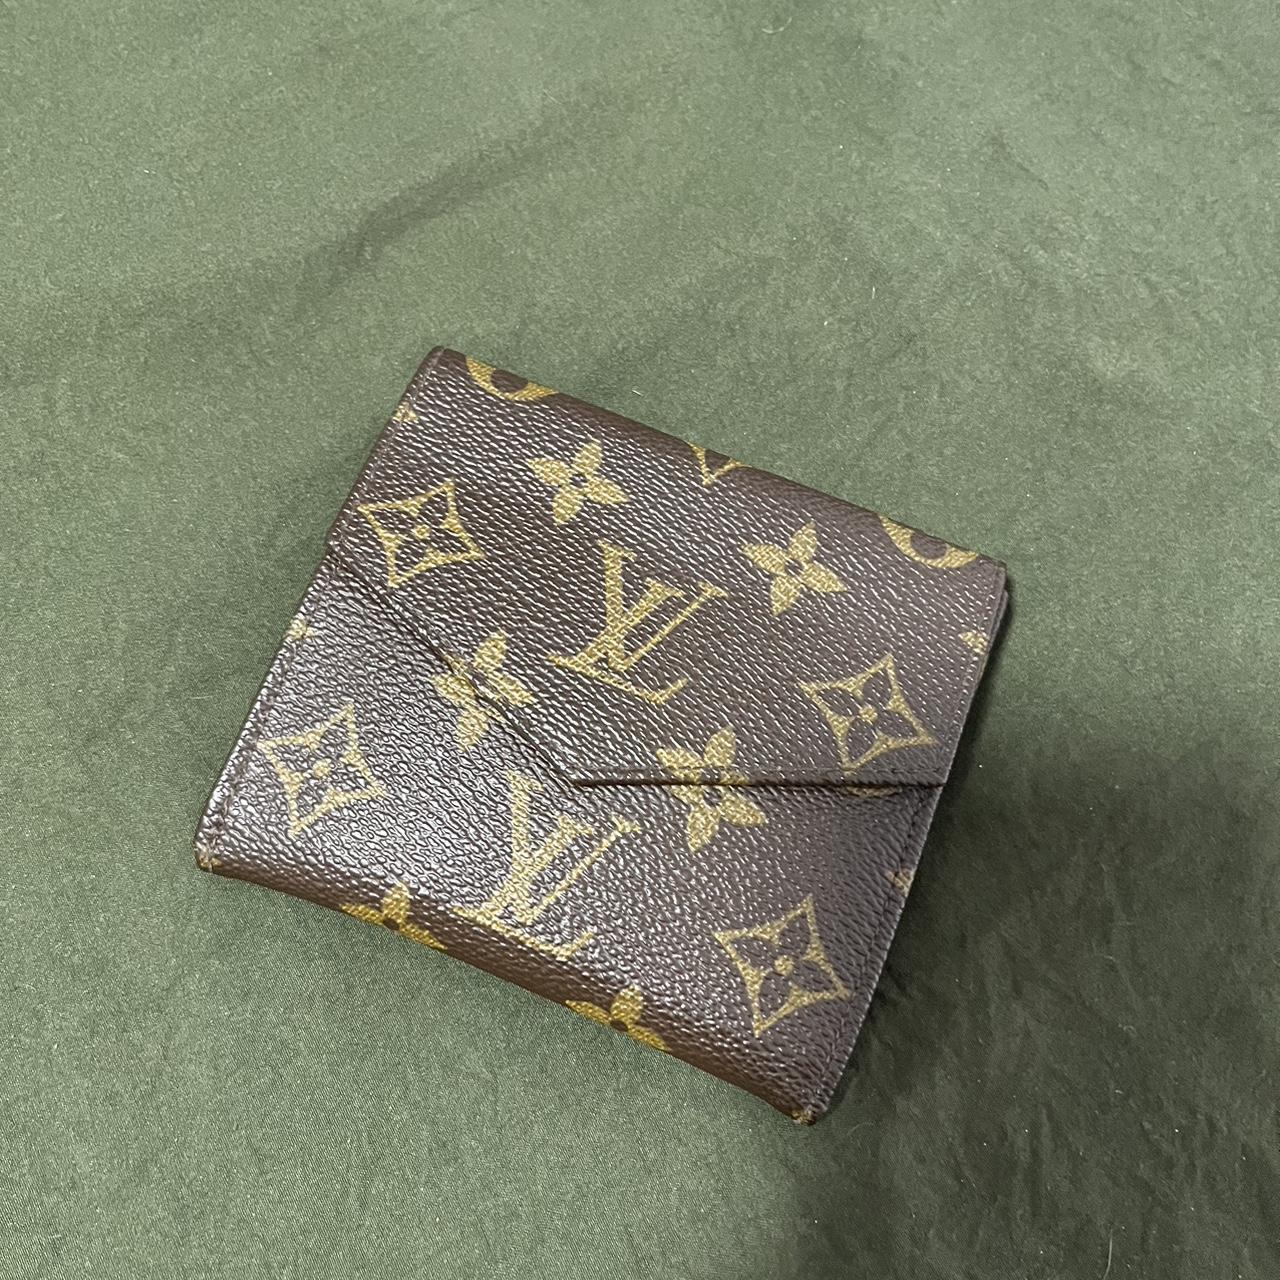 Louis Vuitton Wallet Purse Trifold Monogram Woman Authentic Used